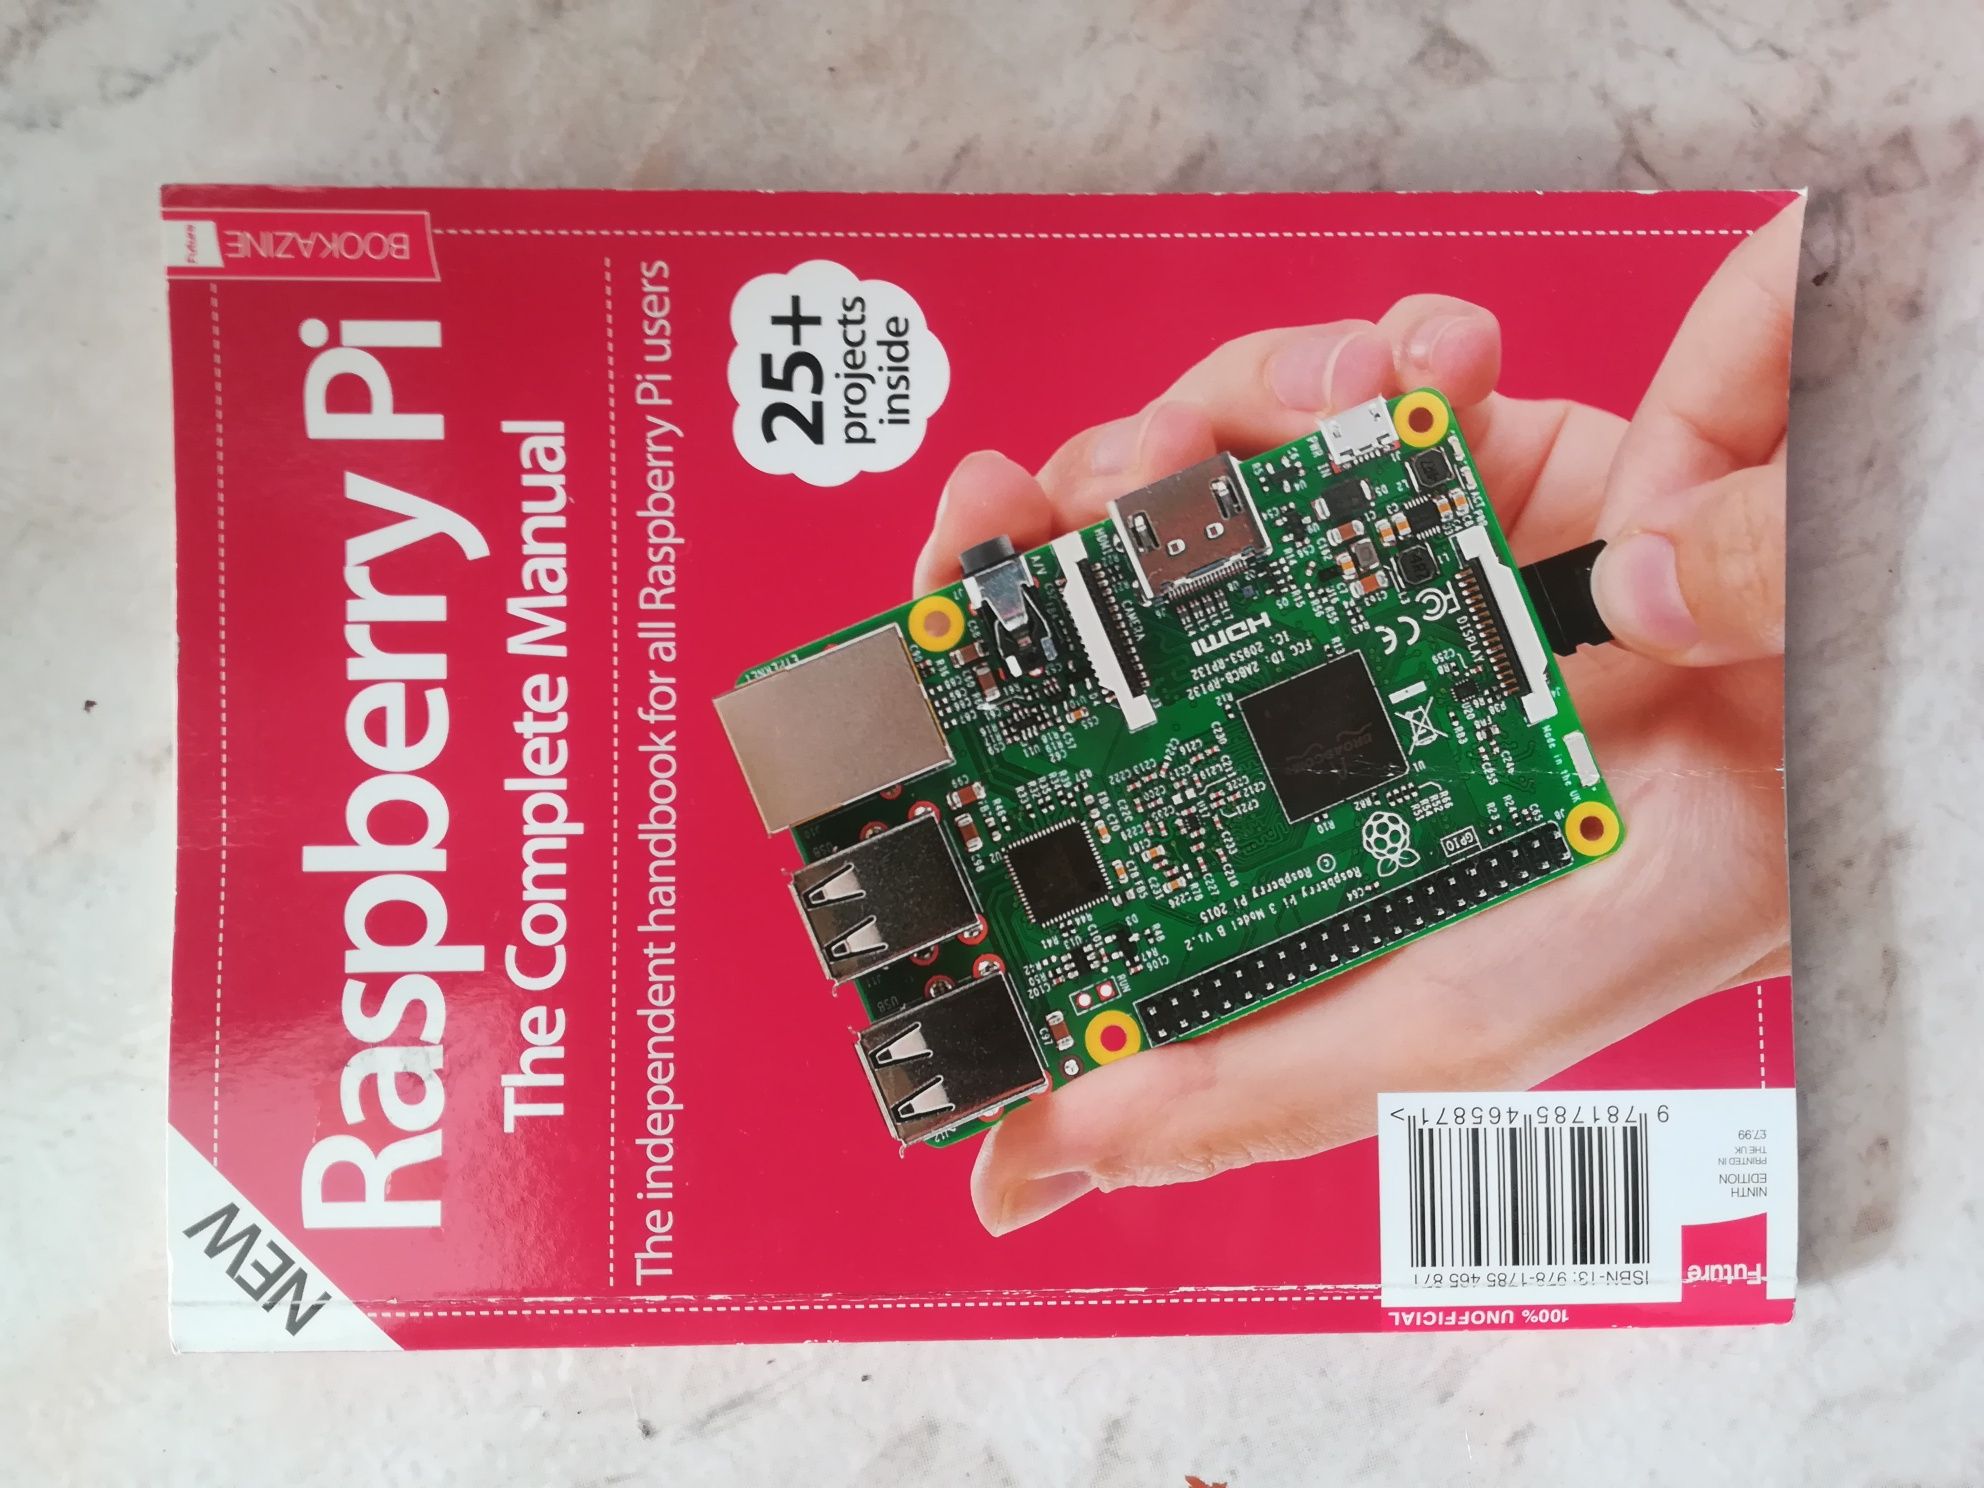 Raspberry Pi Manual